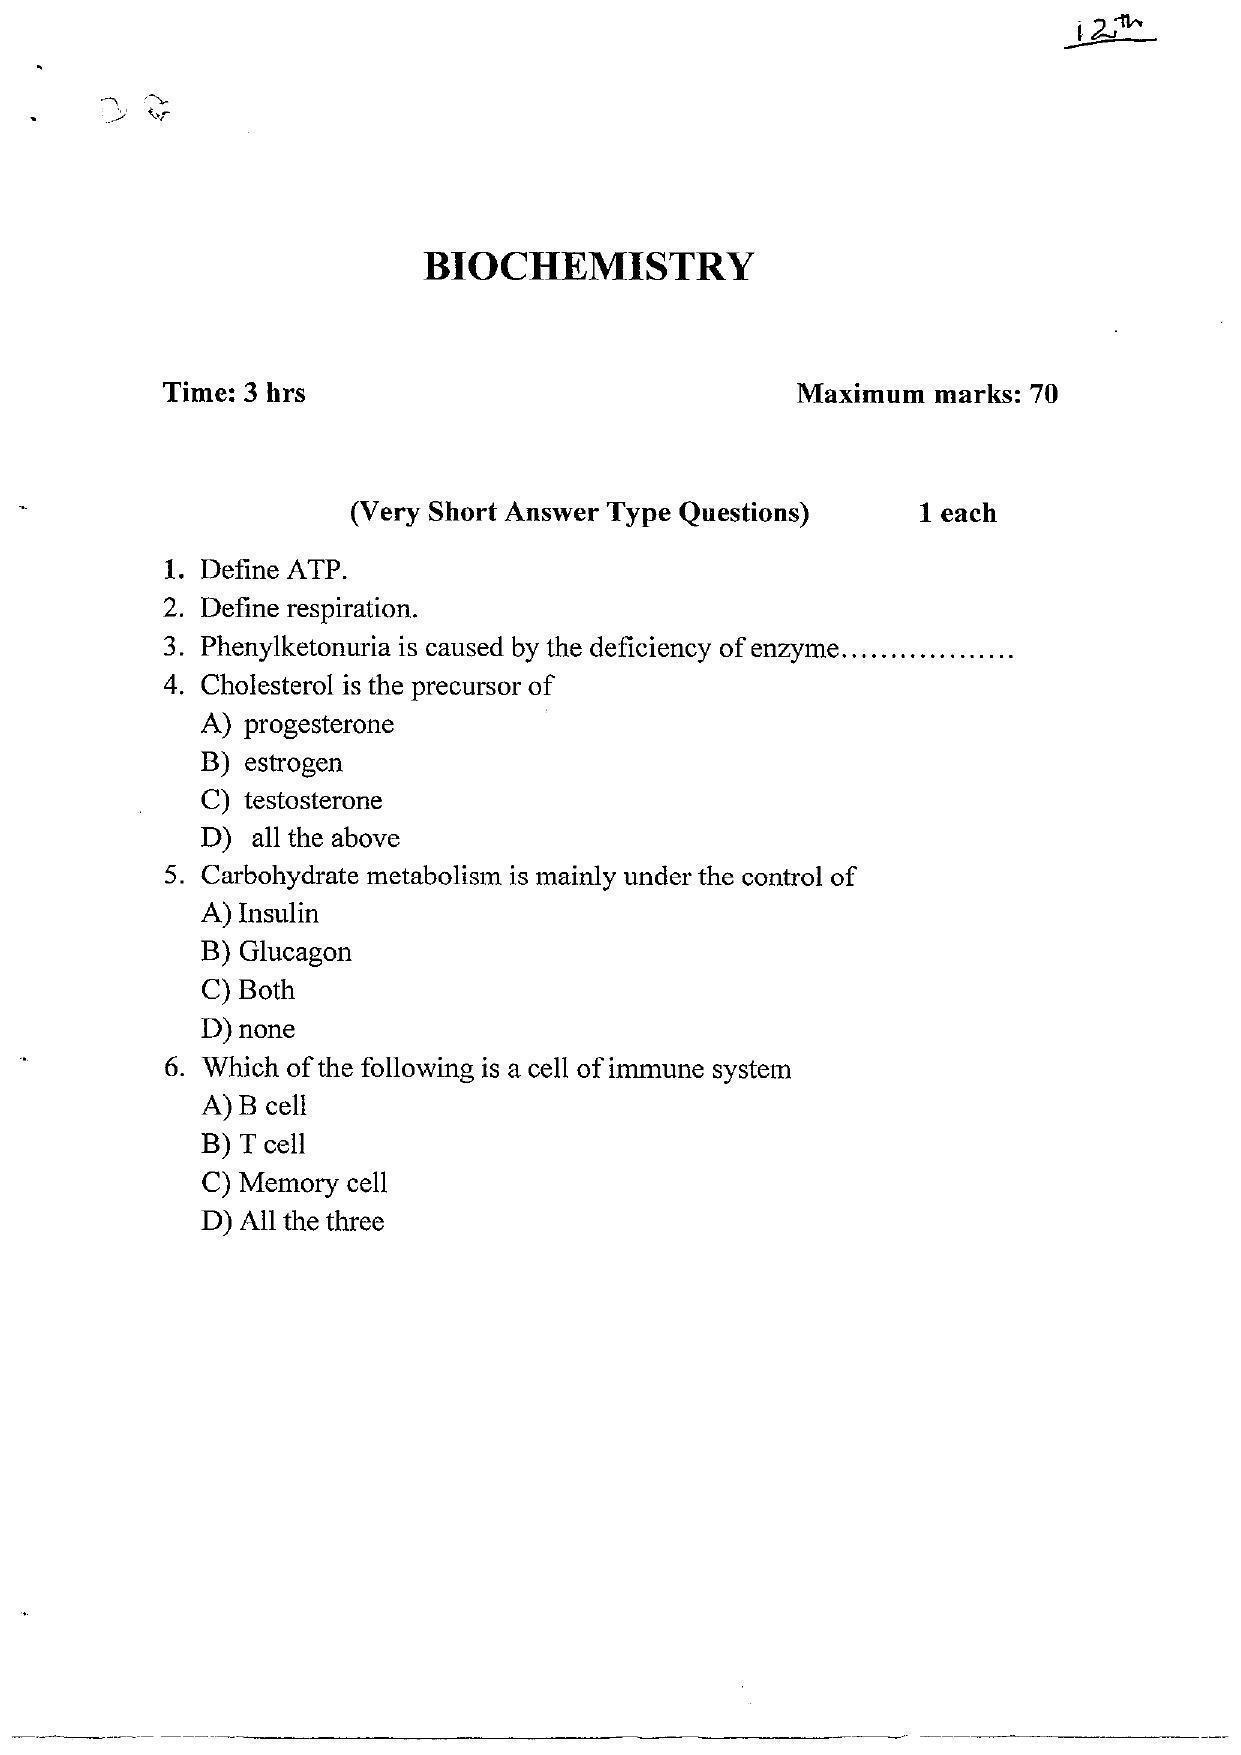 JKBOSE Class 12 Biochemistry Model Question Paper 2023 - Page 1